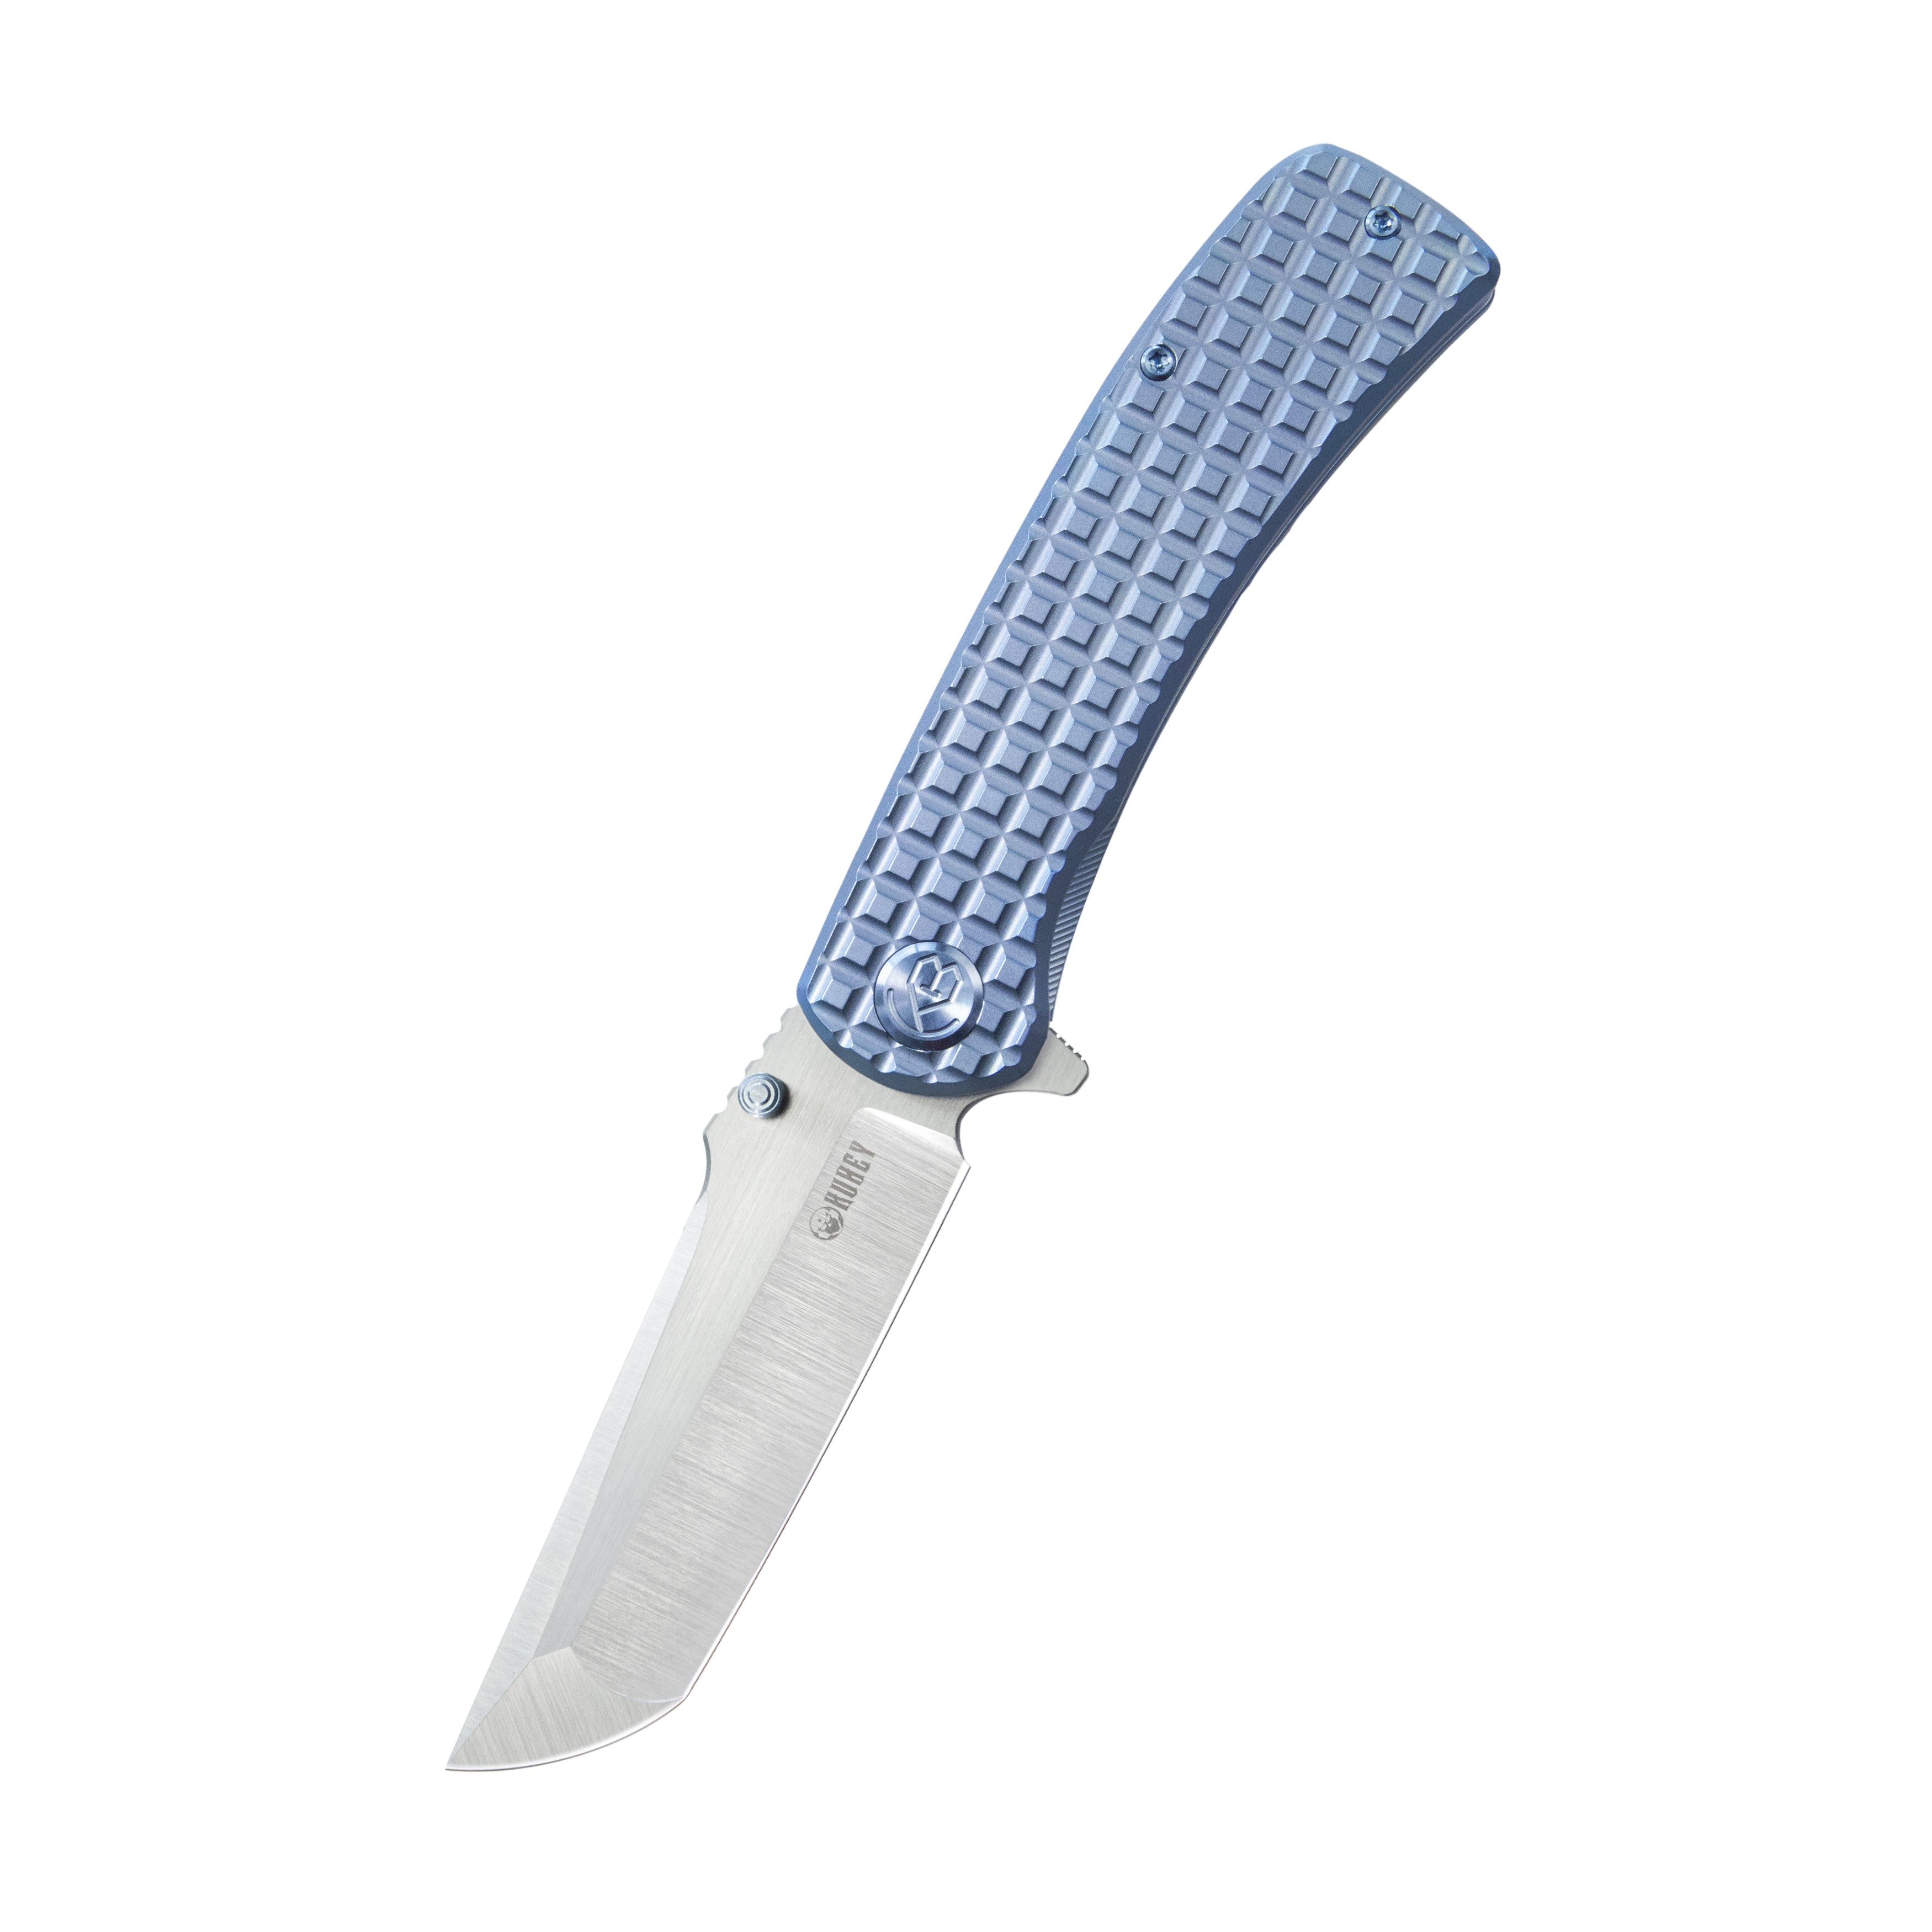 Kubey Interflow Tactical Folding Knife Flipper Folder Blue Titanium Handle 3.50" Belt Satin Bohler M390 Blade KB294B